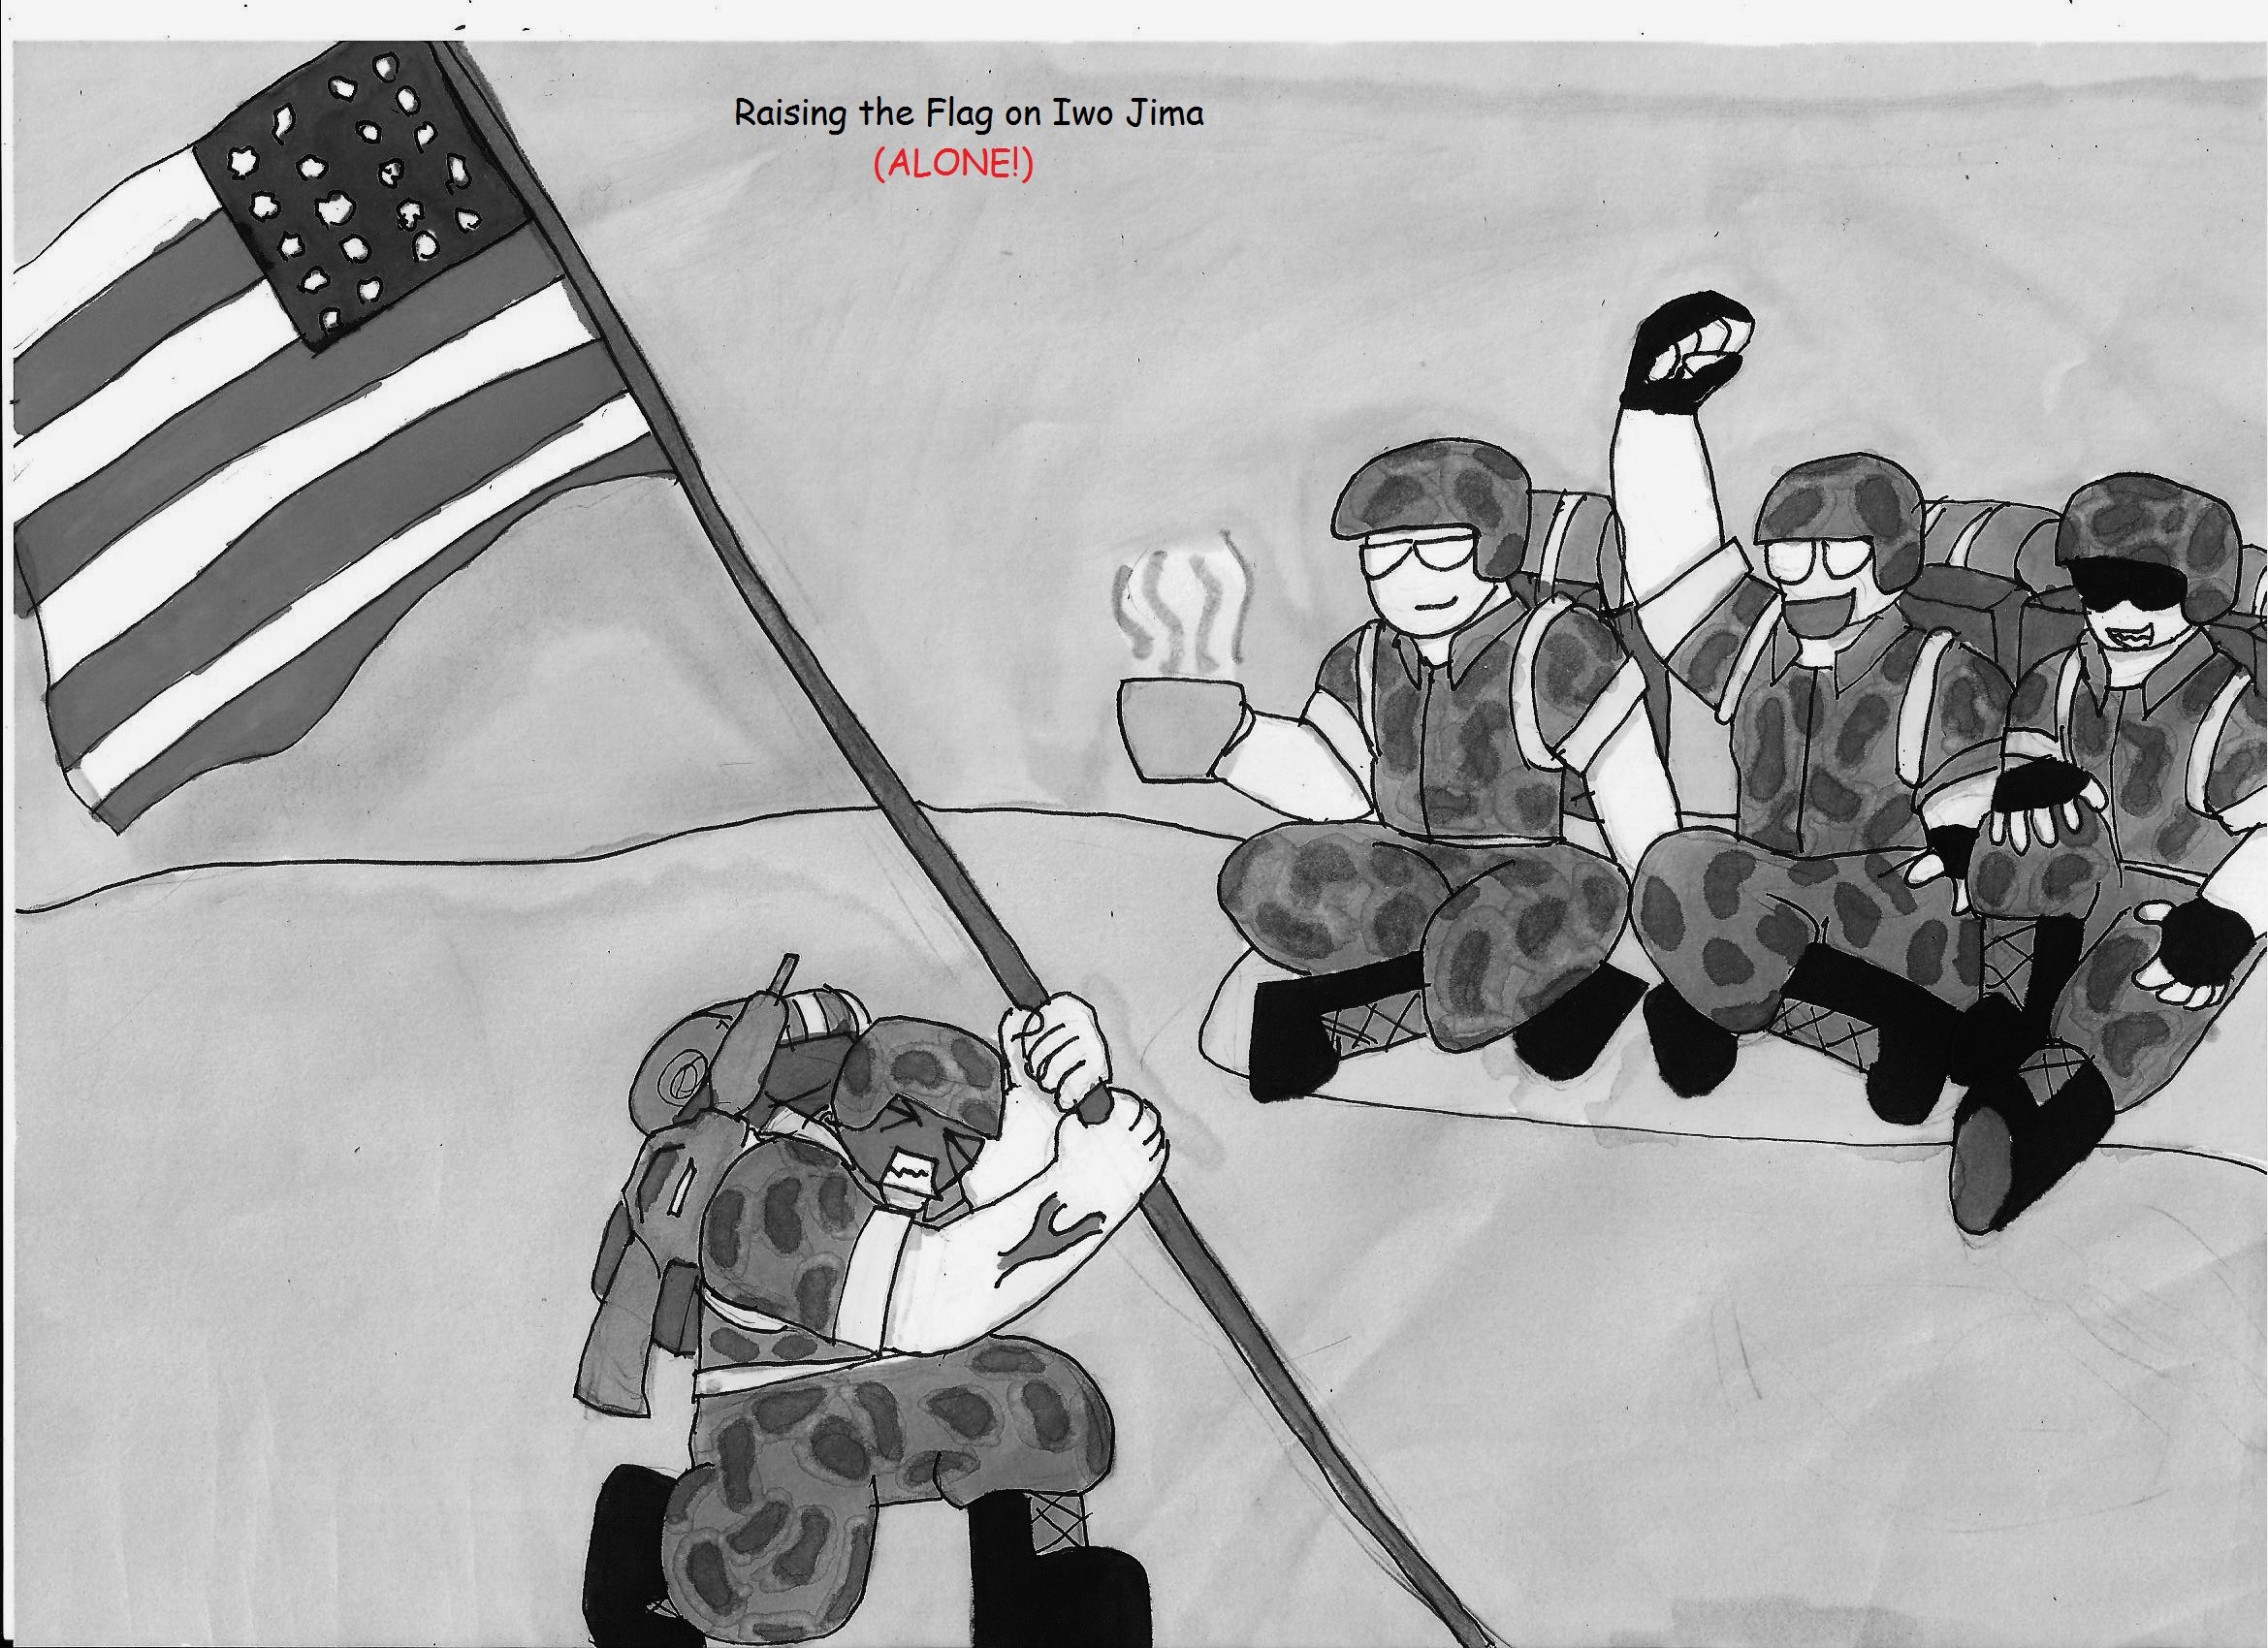 2339x1700 ... Raising the Flag on Iwo Jima by Mrblinblingboss